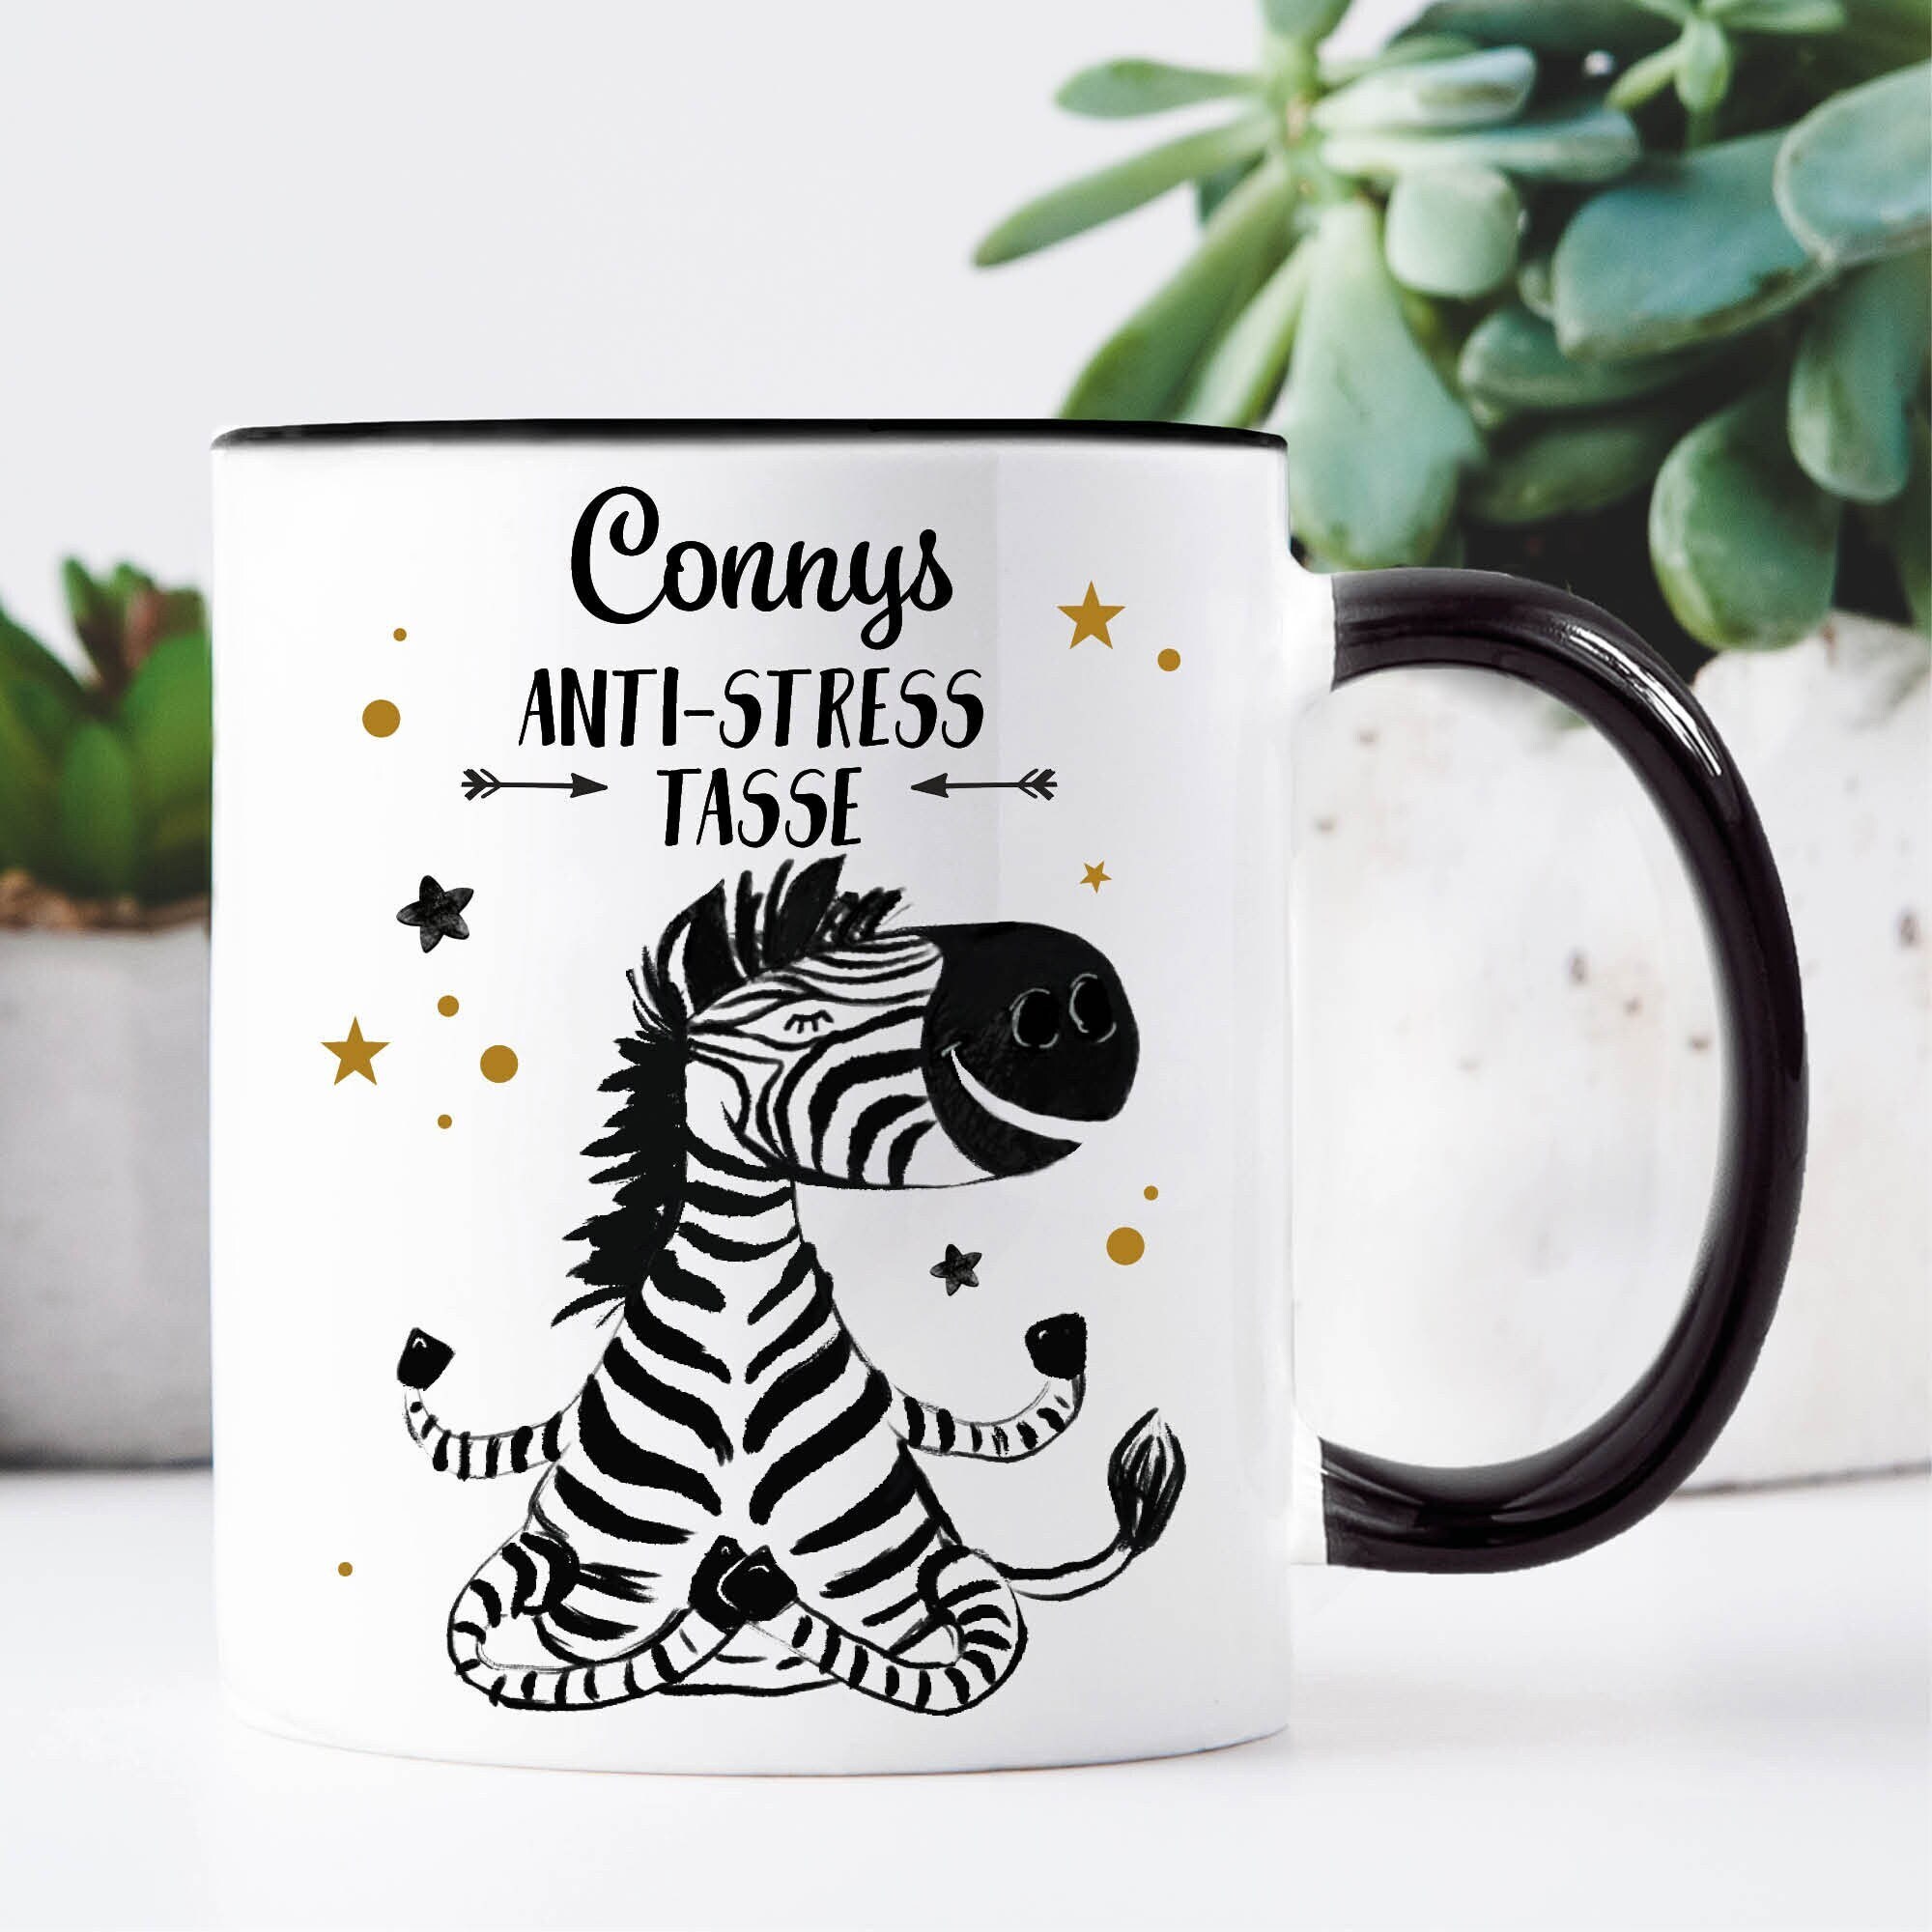 Tasse bedruckt Zebra Yoga Anti-Stress Tasse personalisiert mit Namen, Geschenk Freundin, Kaffeetasse Kaffeebecher